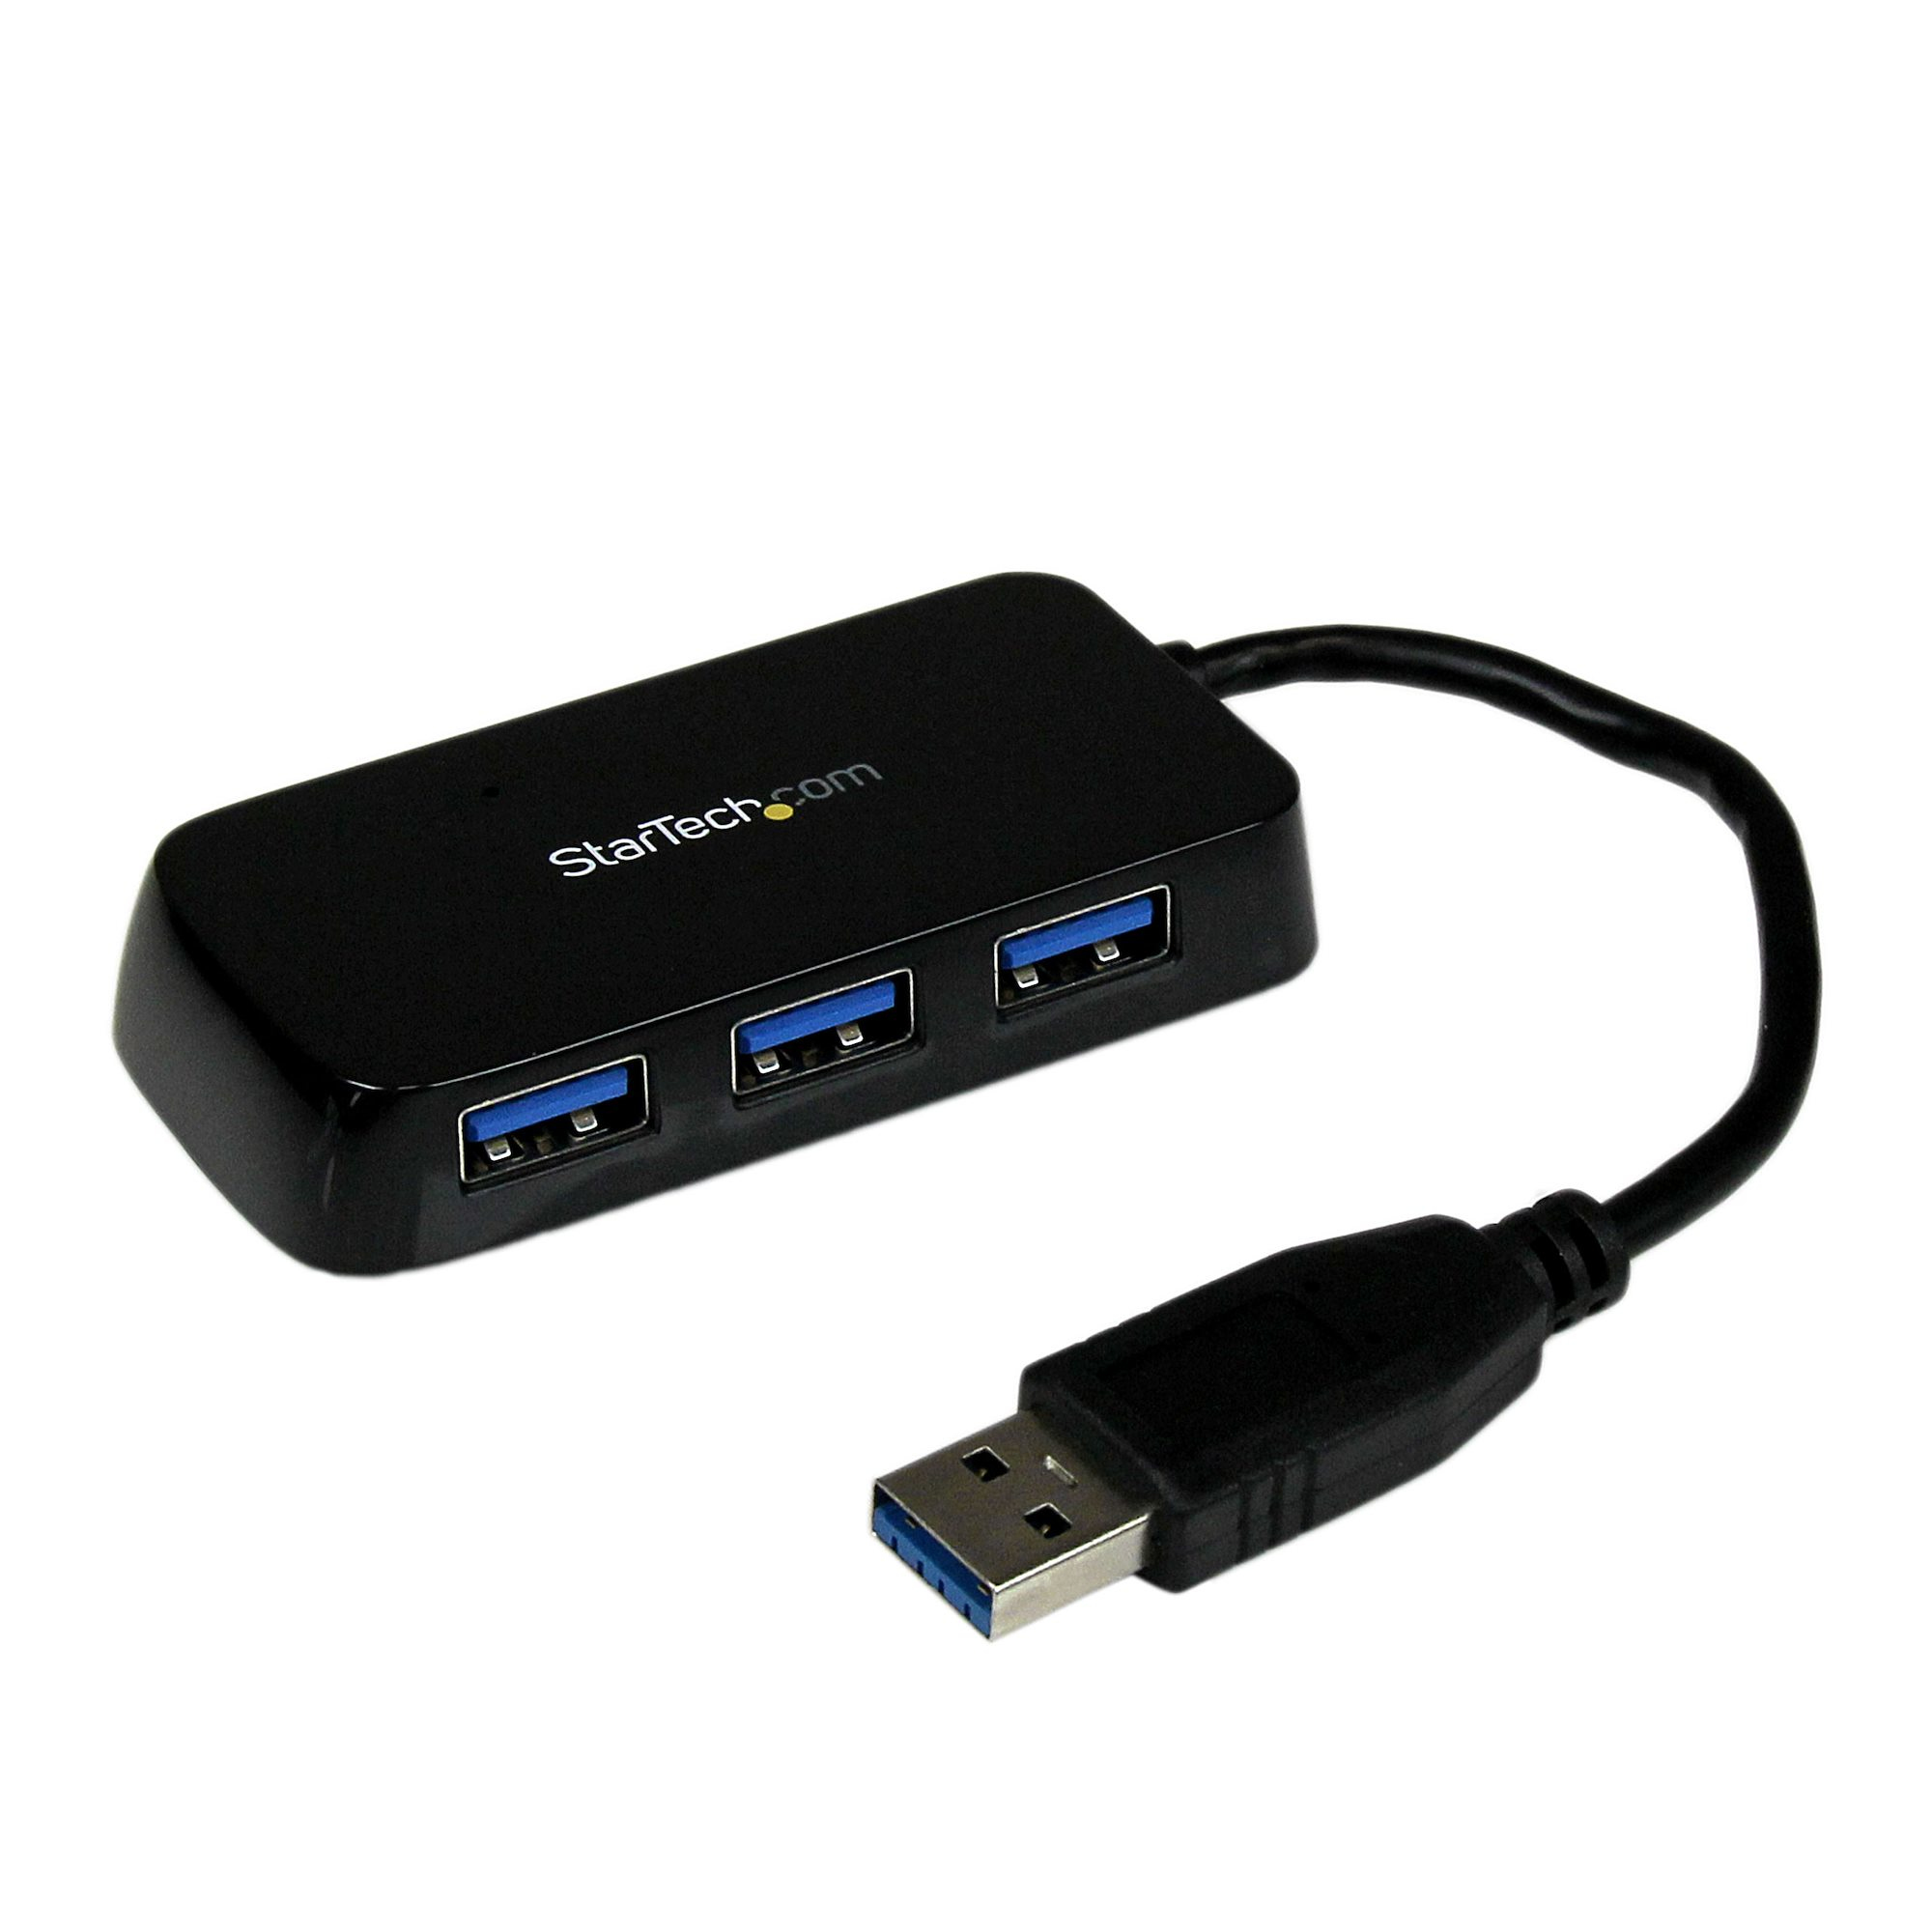 StarTech.com 4 Port USB 3.0 SuperSpeed Hub - Schwarz